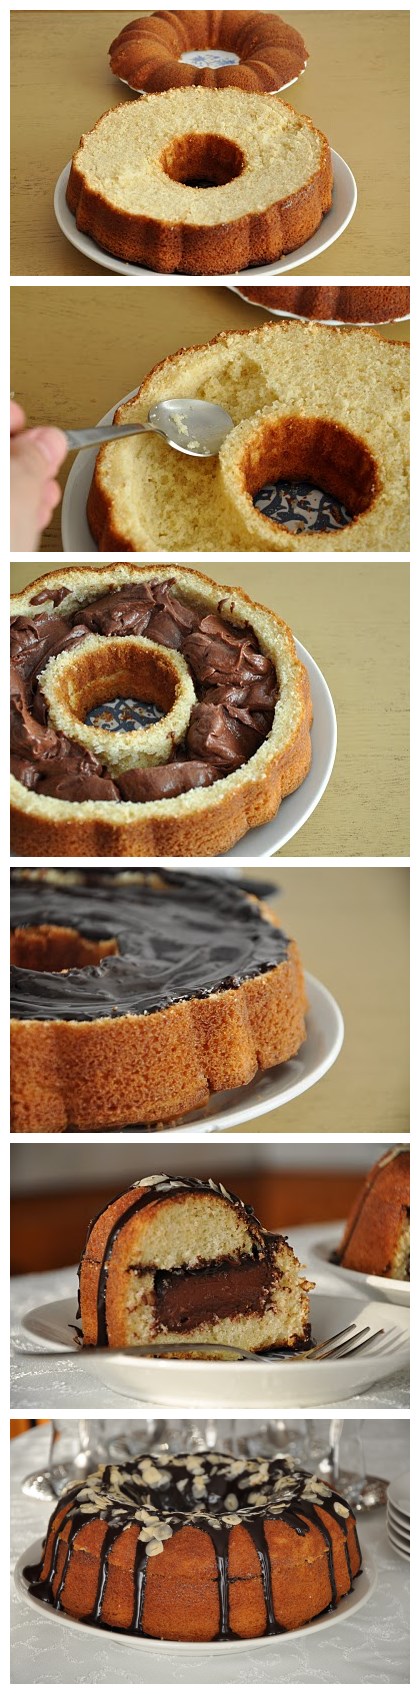 chocolate-filled-cake.jpg